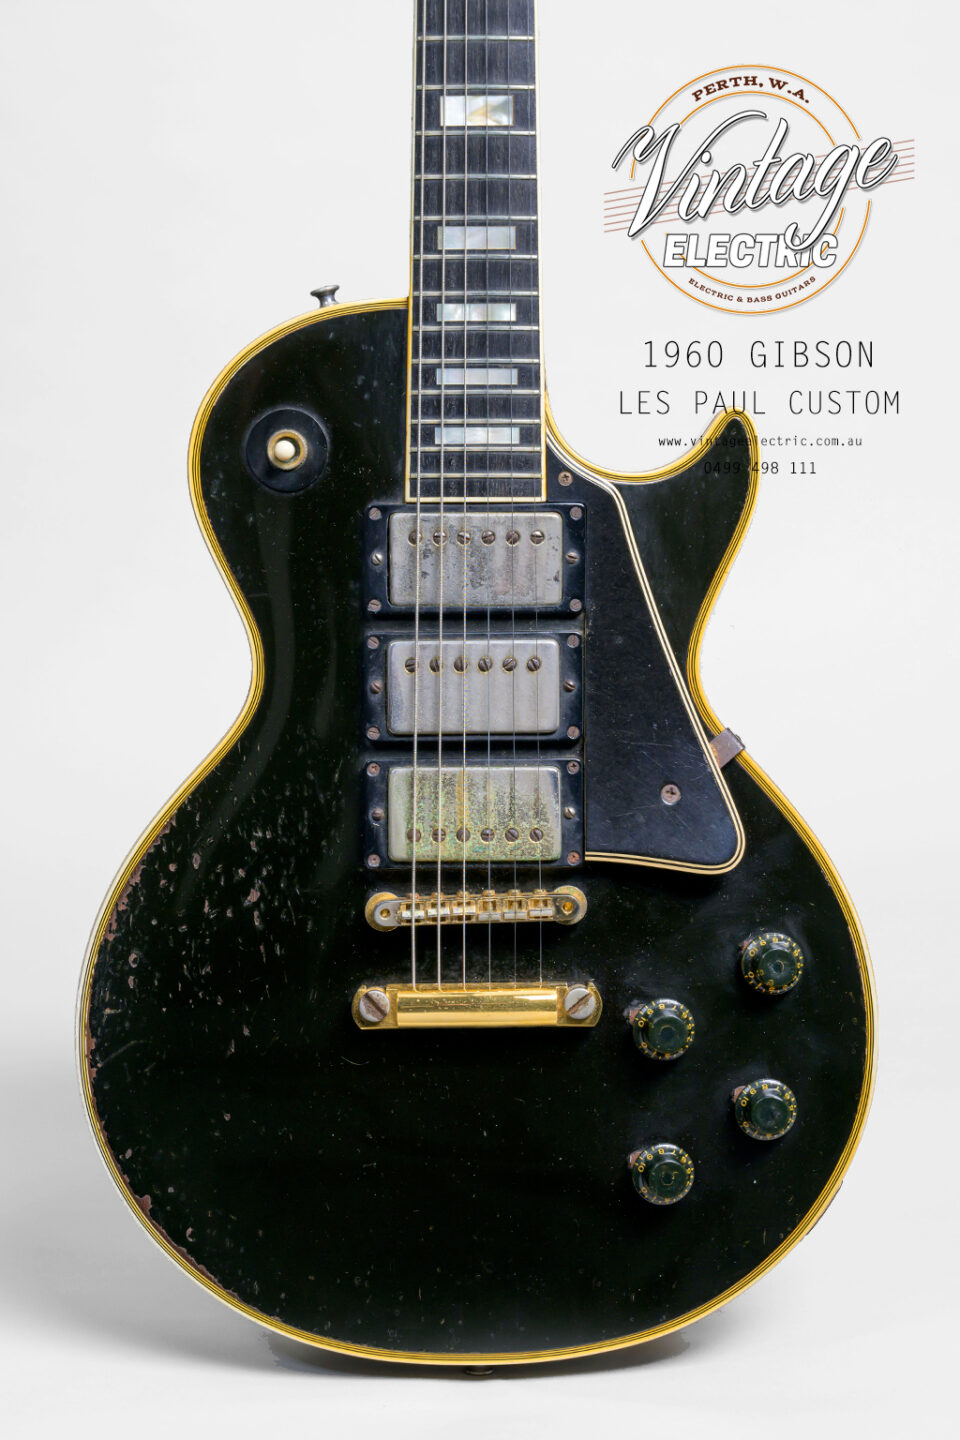 1960 Gibson Les Paul Custom Black Beauty Body